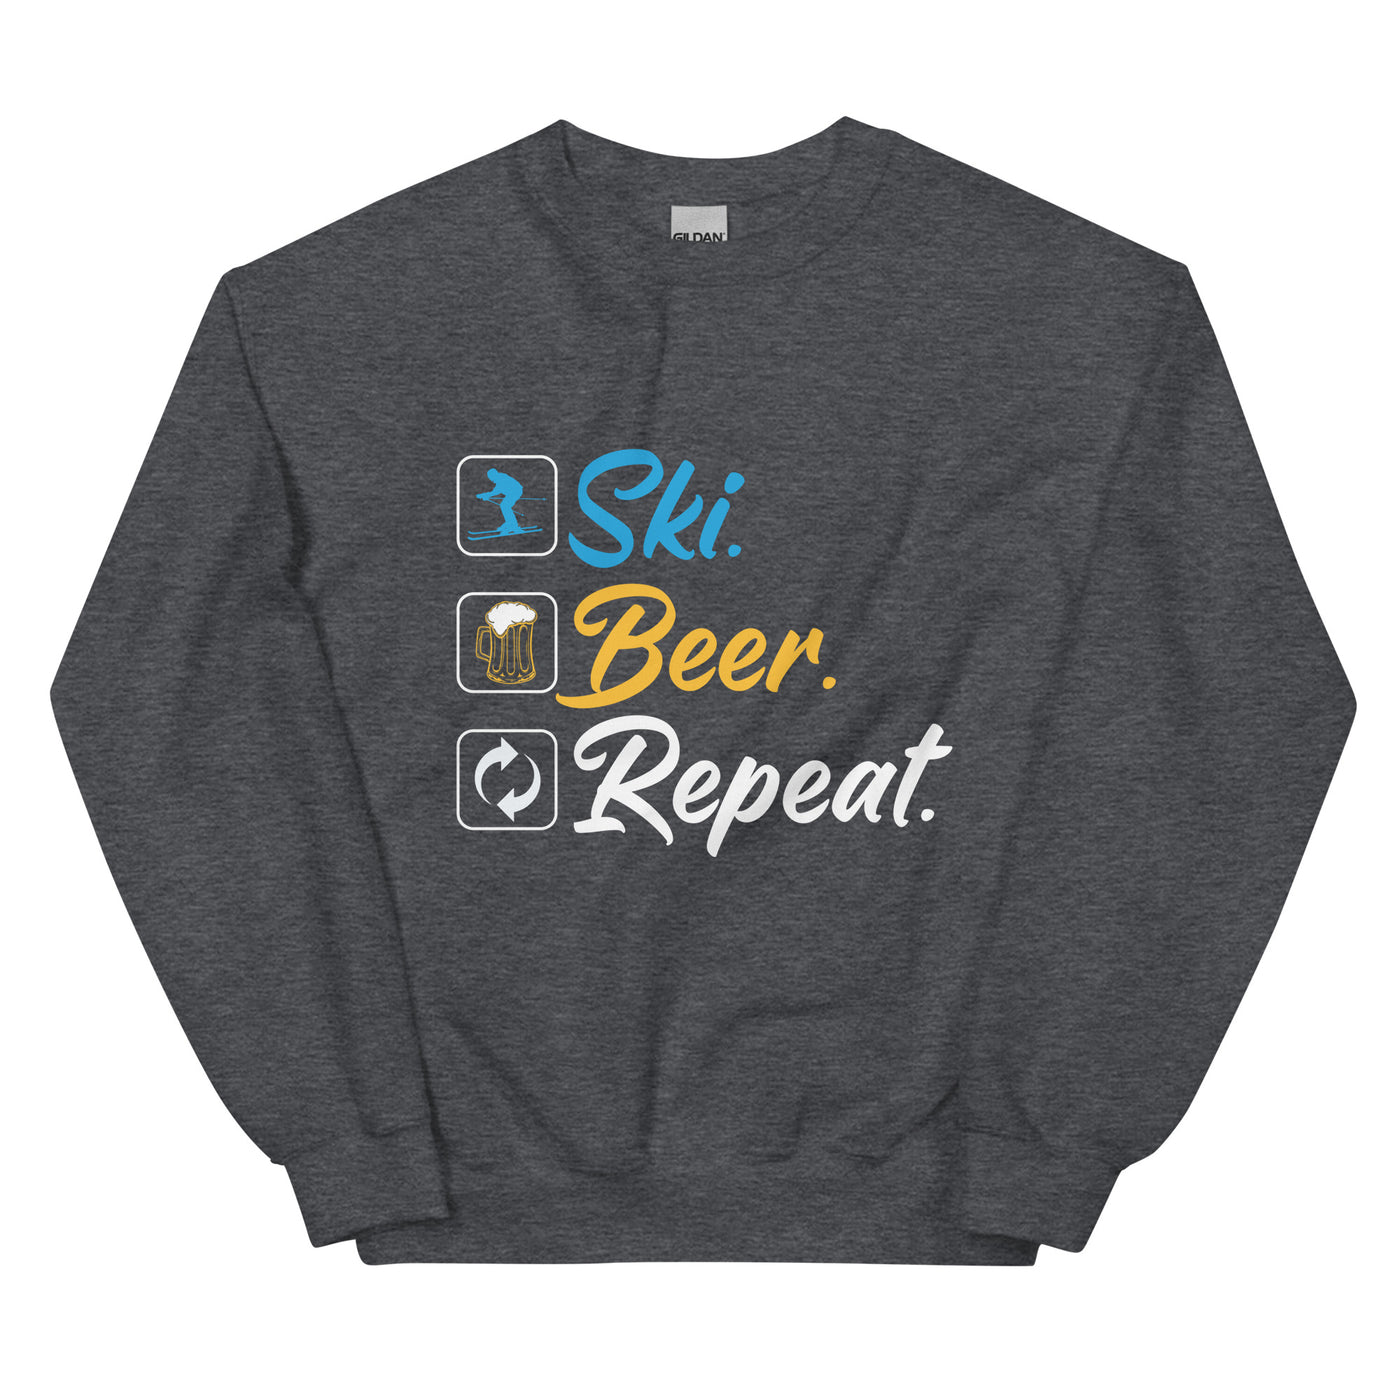 Ski. Bär. Repeat. - (S.K) - Sweatshirt (Unisex) klettern xxx yyy zzz Dark Heather